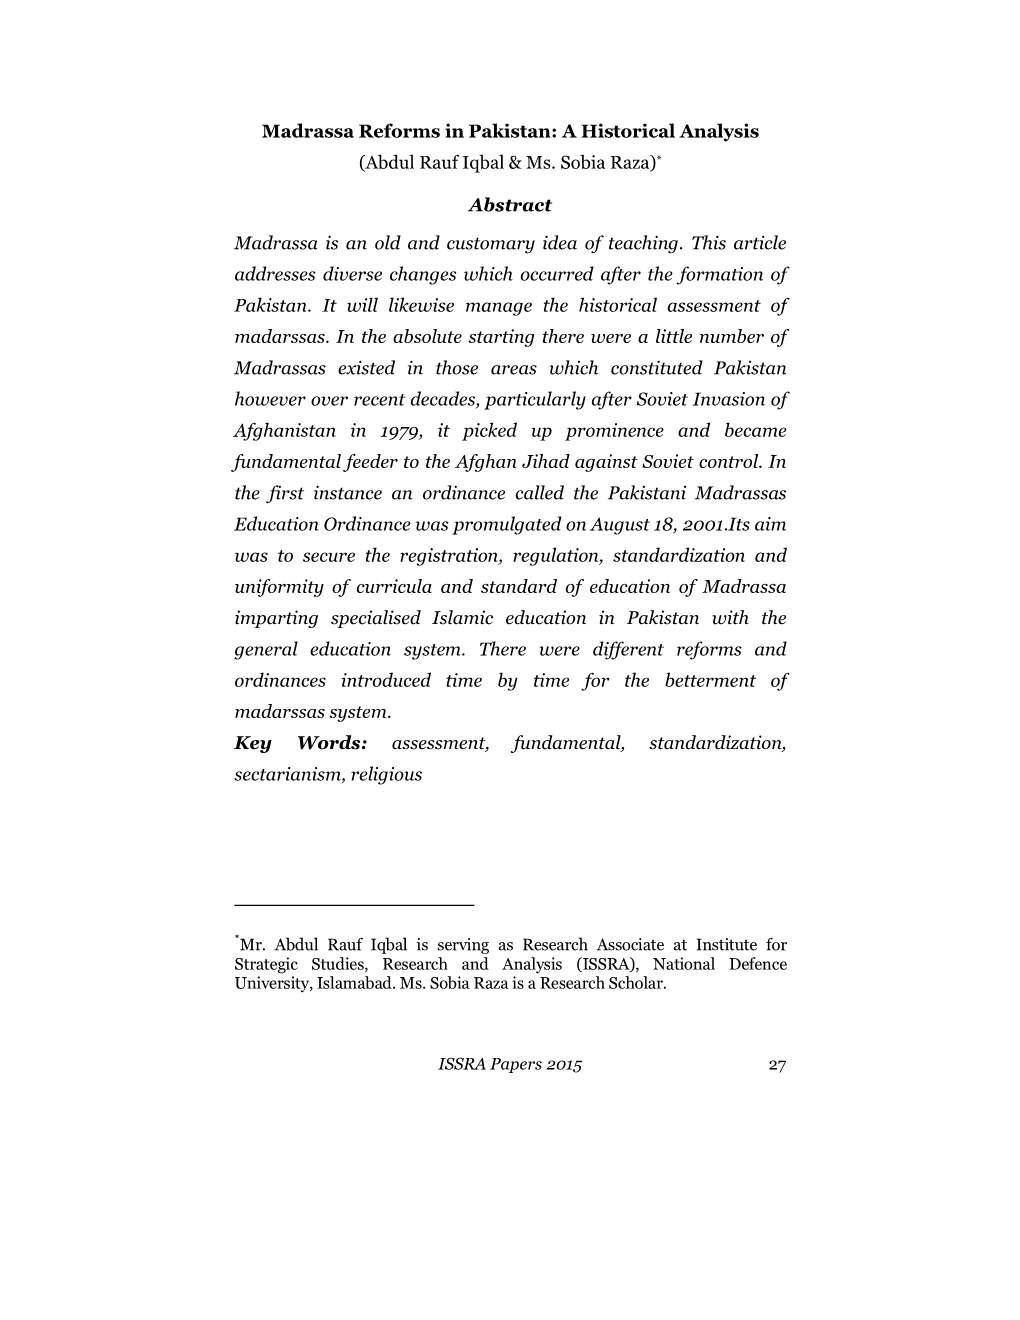 Madrassa Reforms in Pakistan: a Historical Analysis (Abdul Rauf Iqbal & Ms